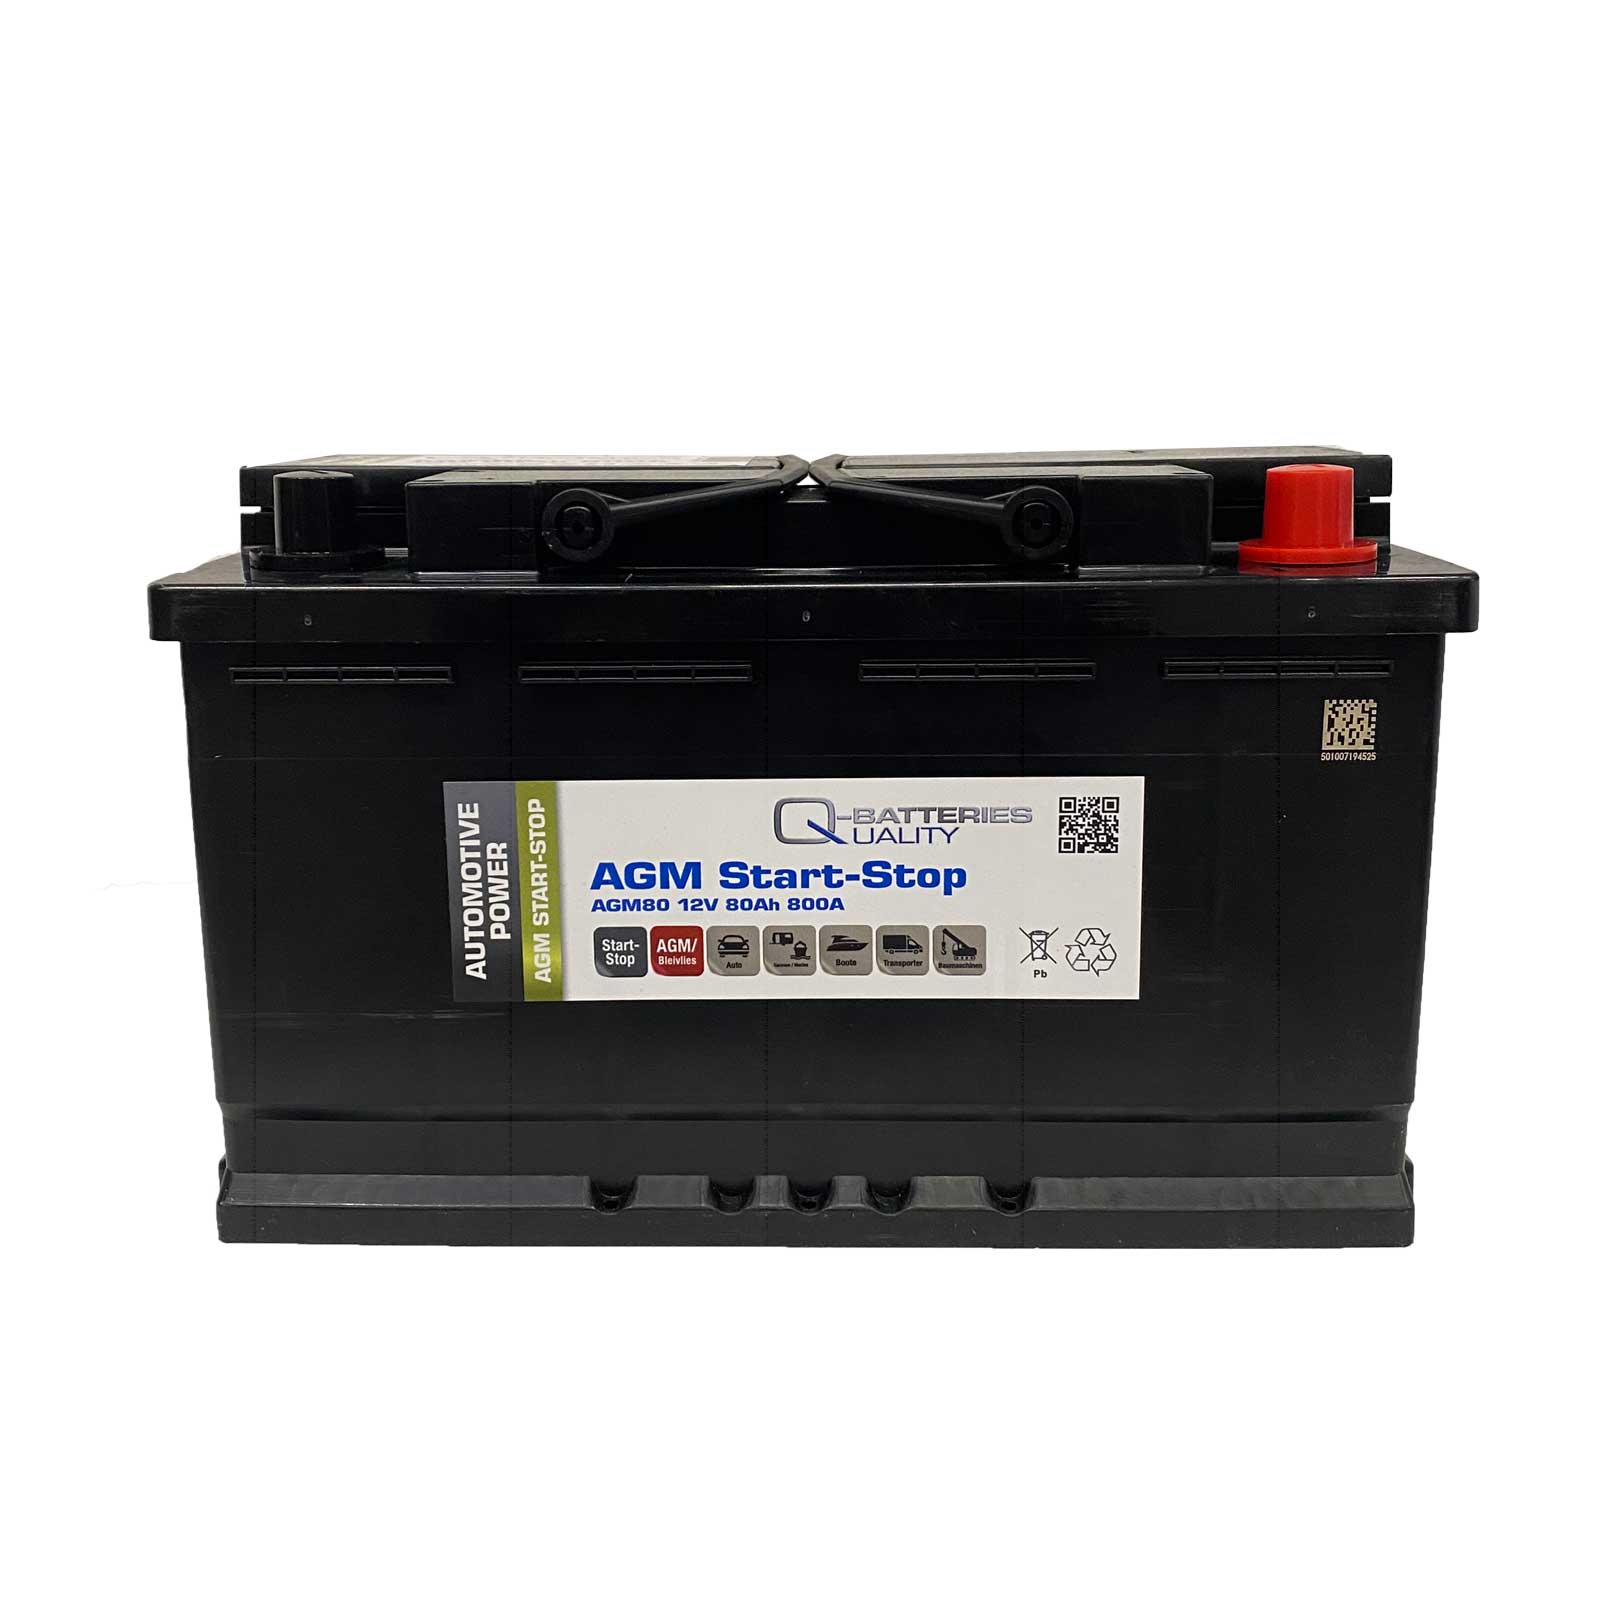 CARIPAR GREEN LINE AGM STOP-GO Autobatterie Starterbatterie 12V 80Ah 800A/EN  